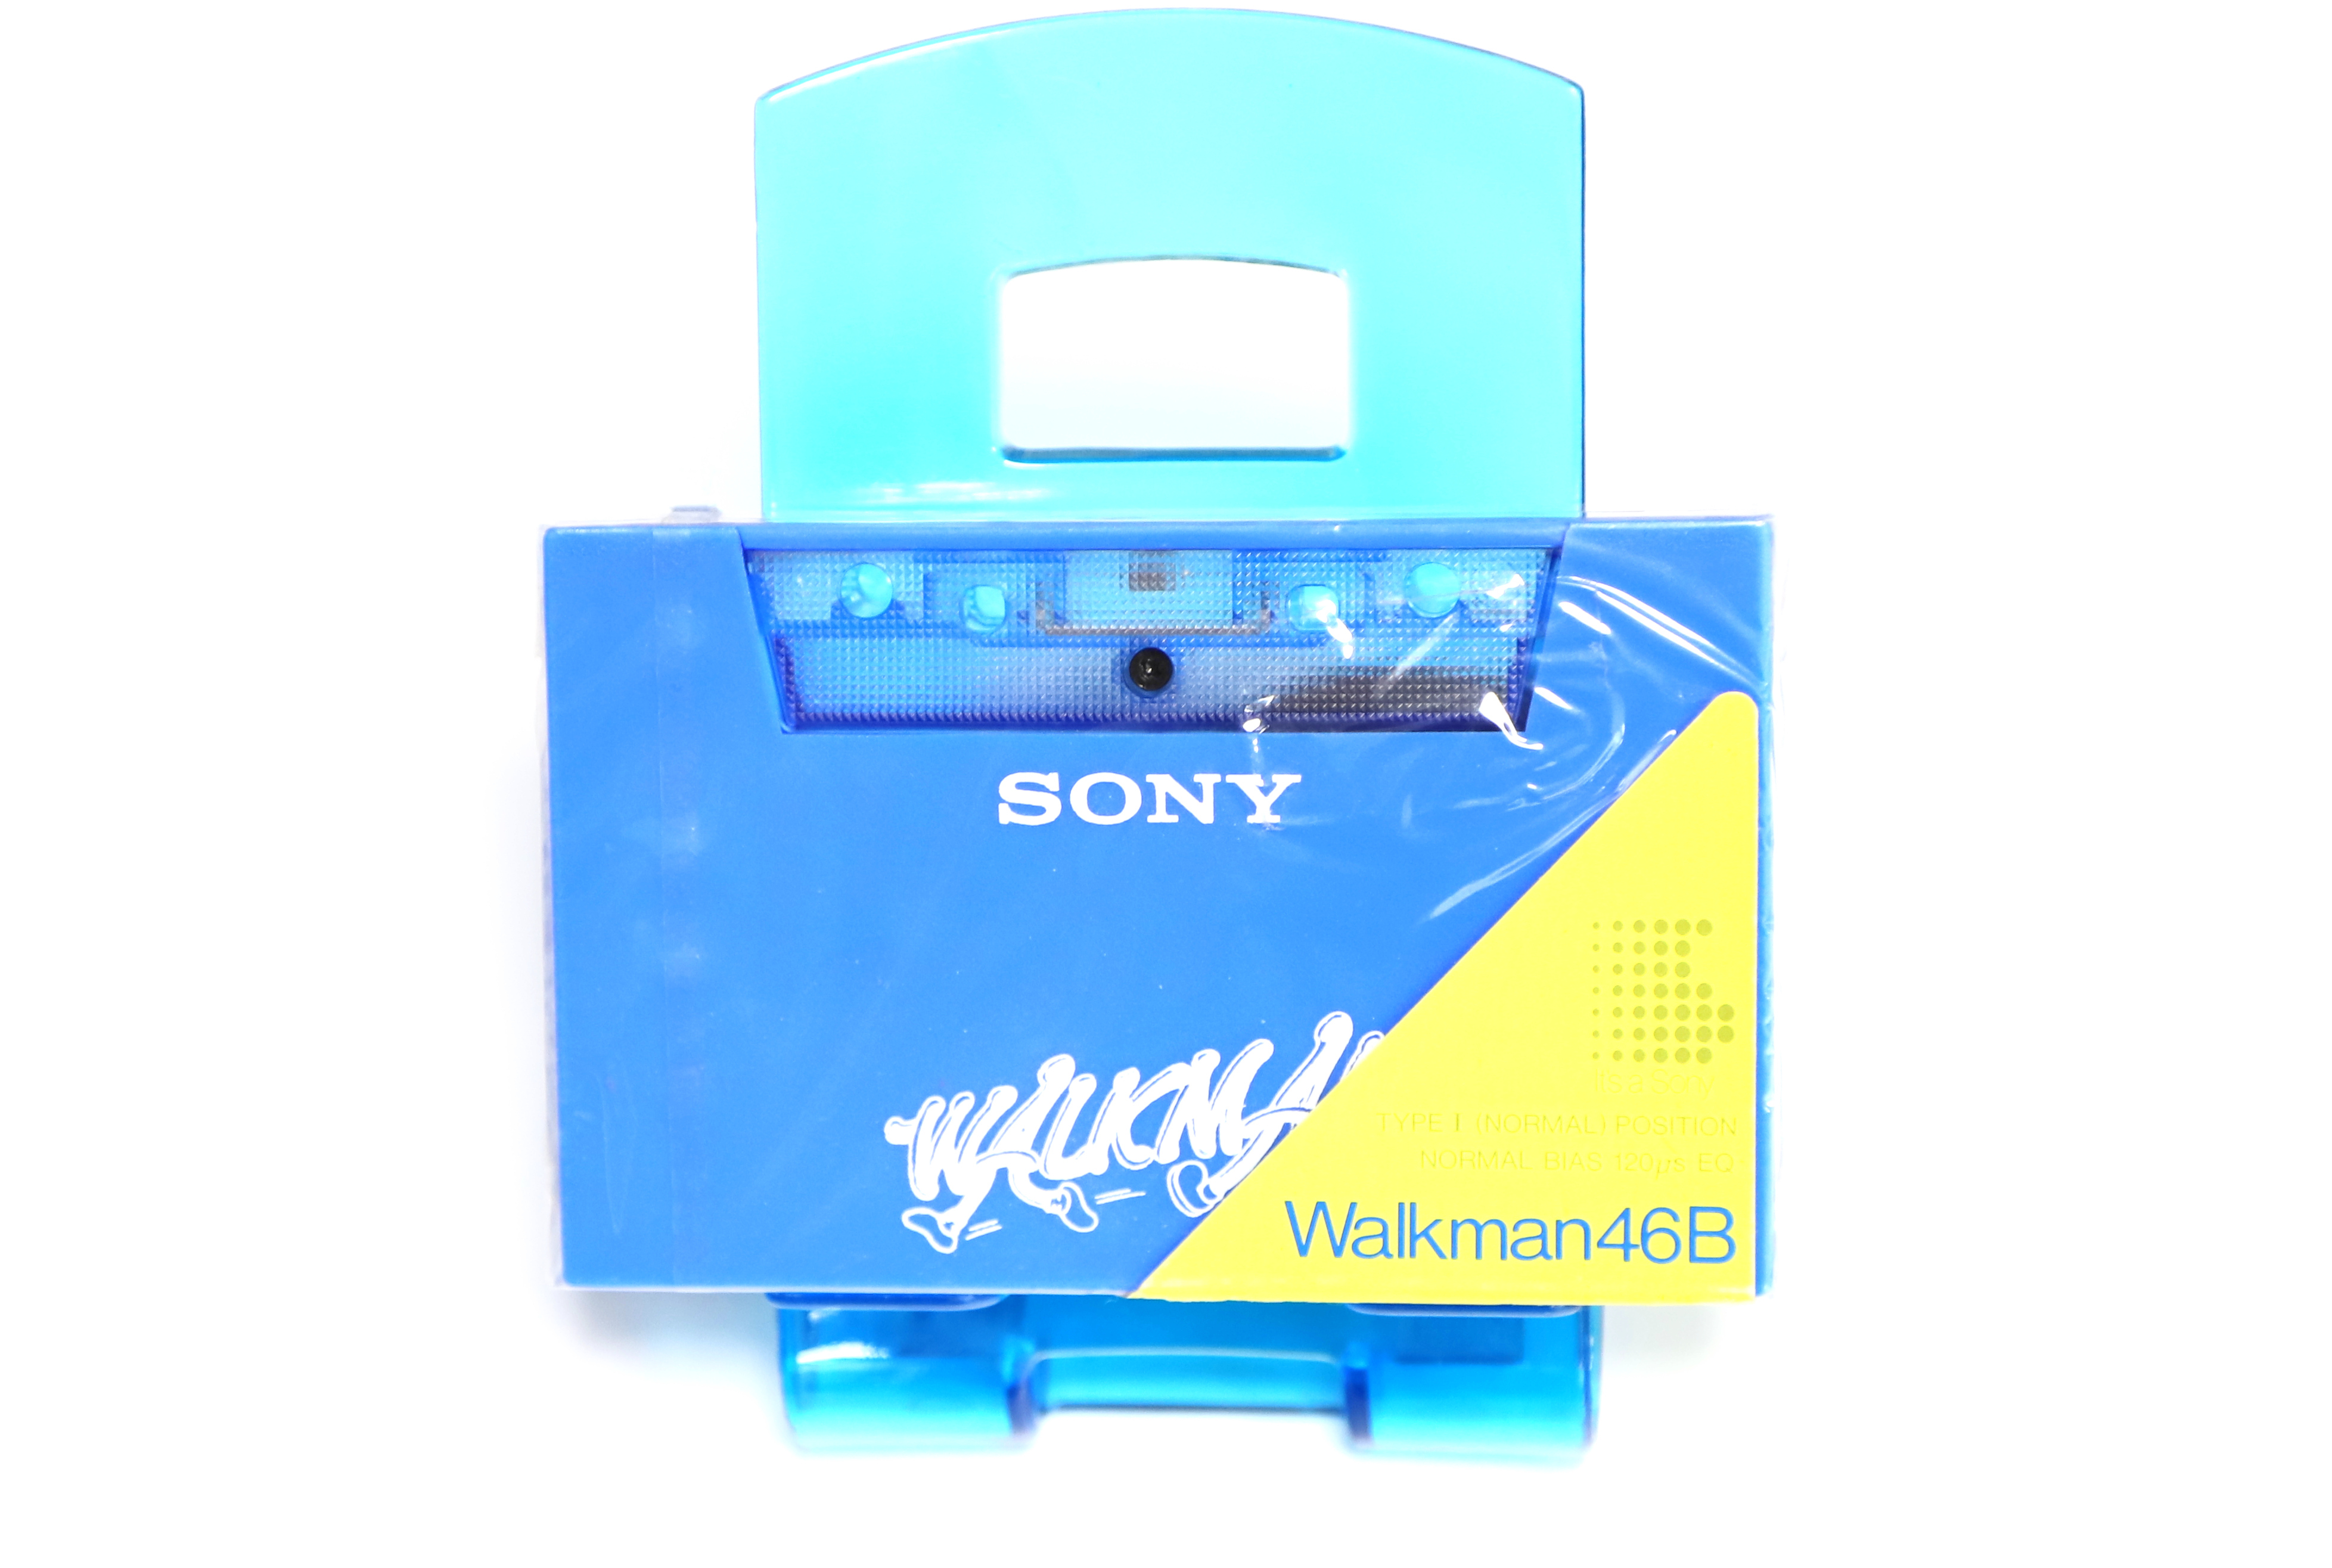 SONY Walkman 46B Japan